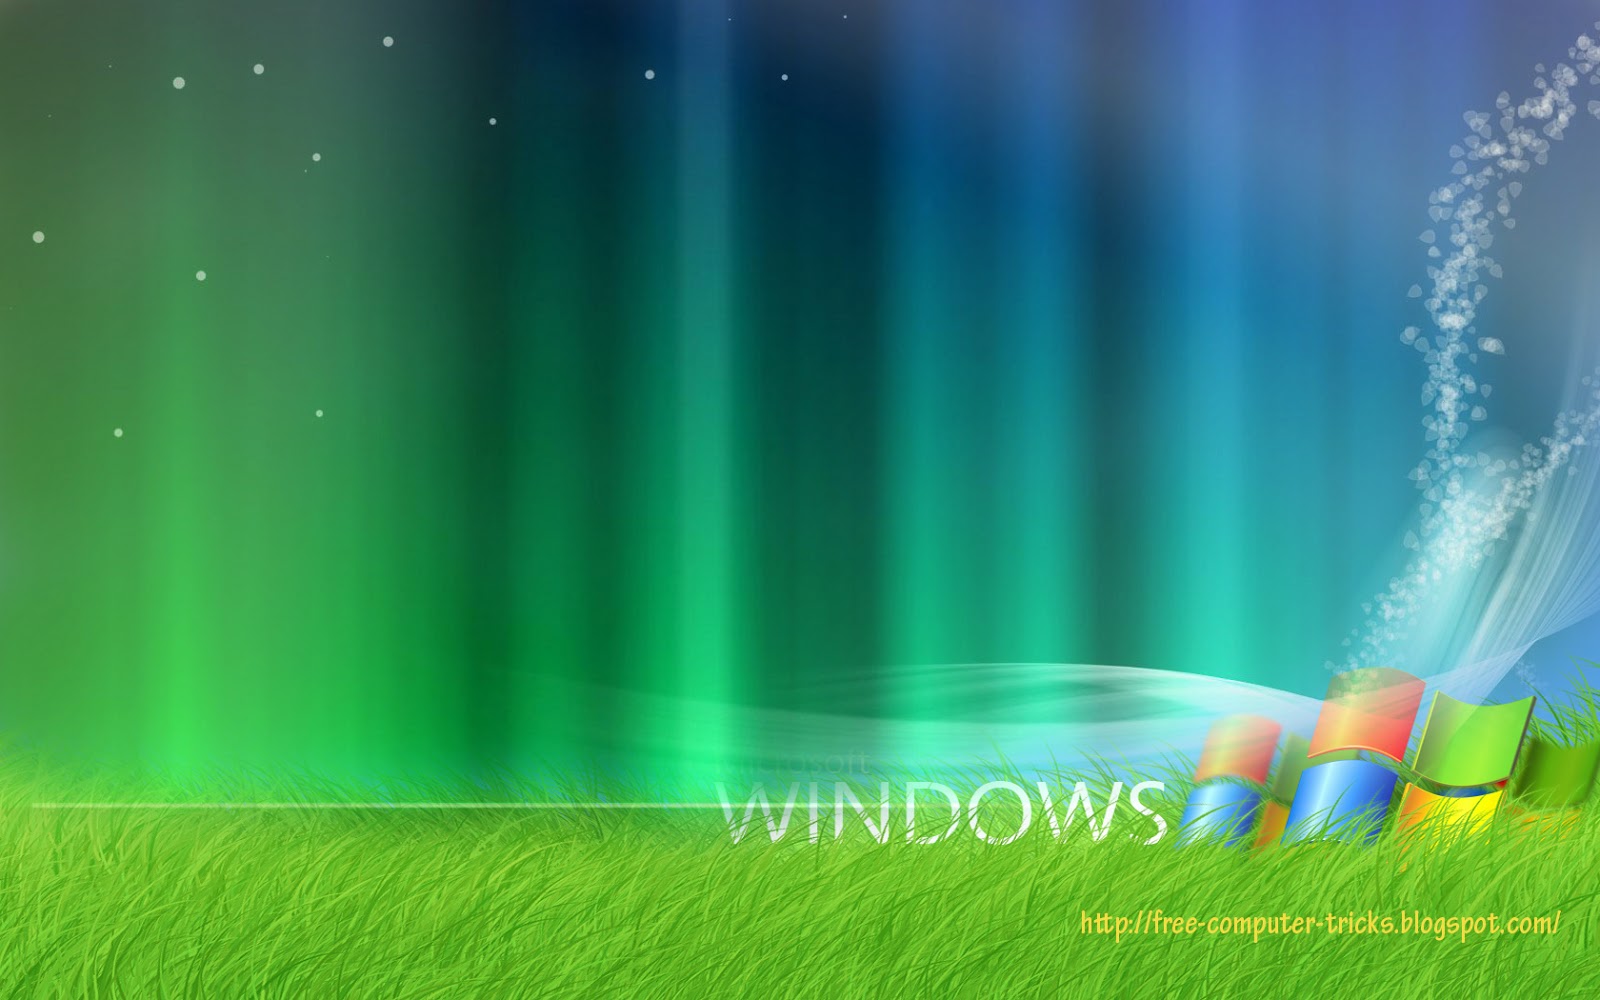 Windows Wallpaper HDtv 1080p Imagini